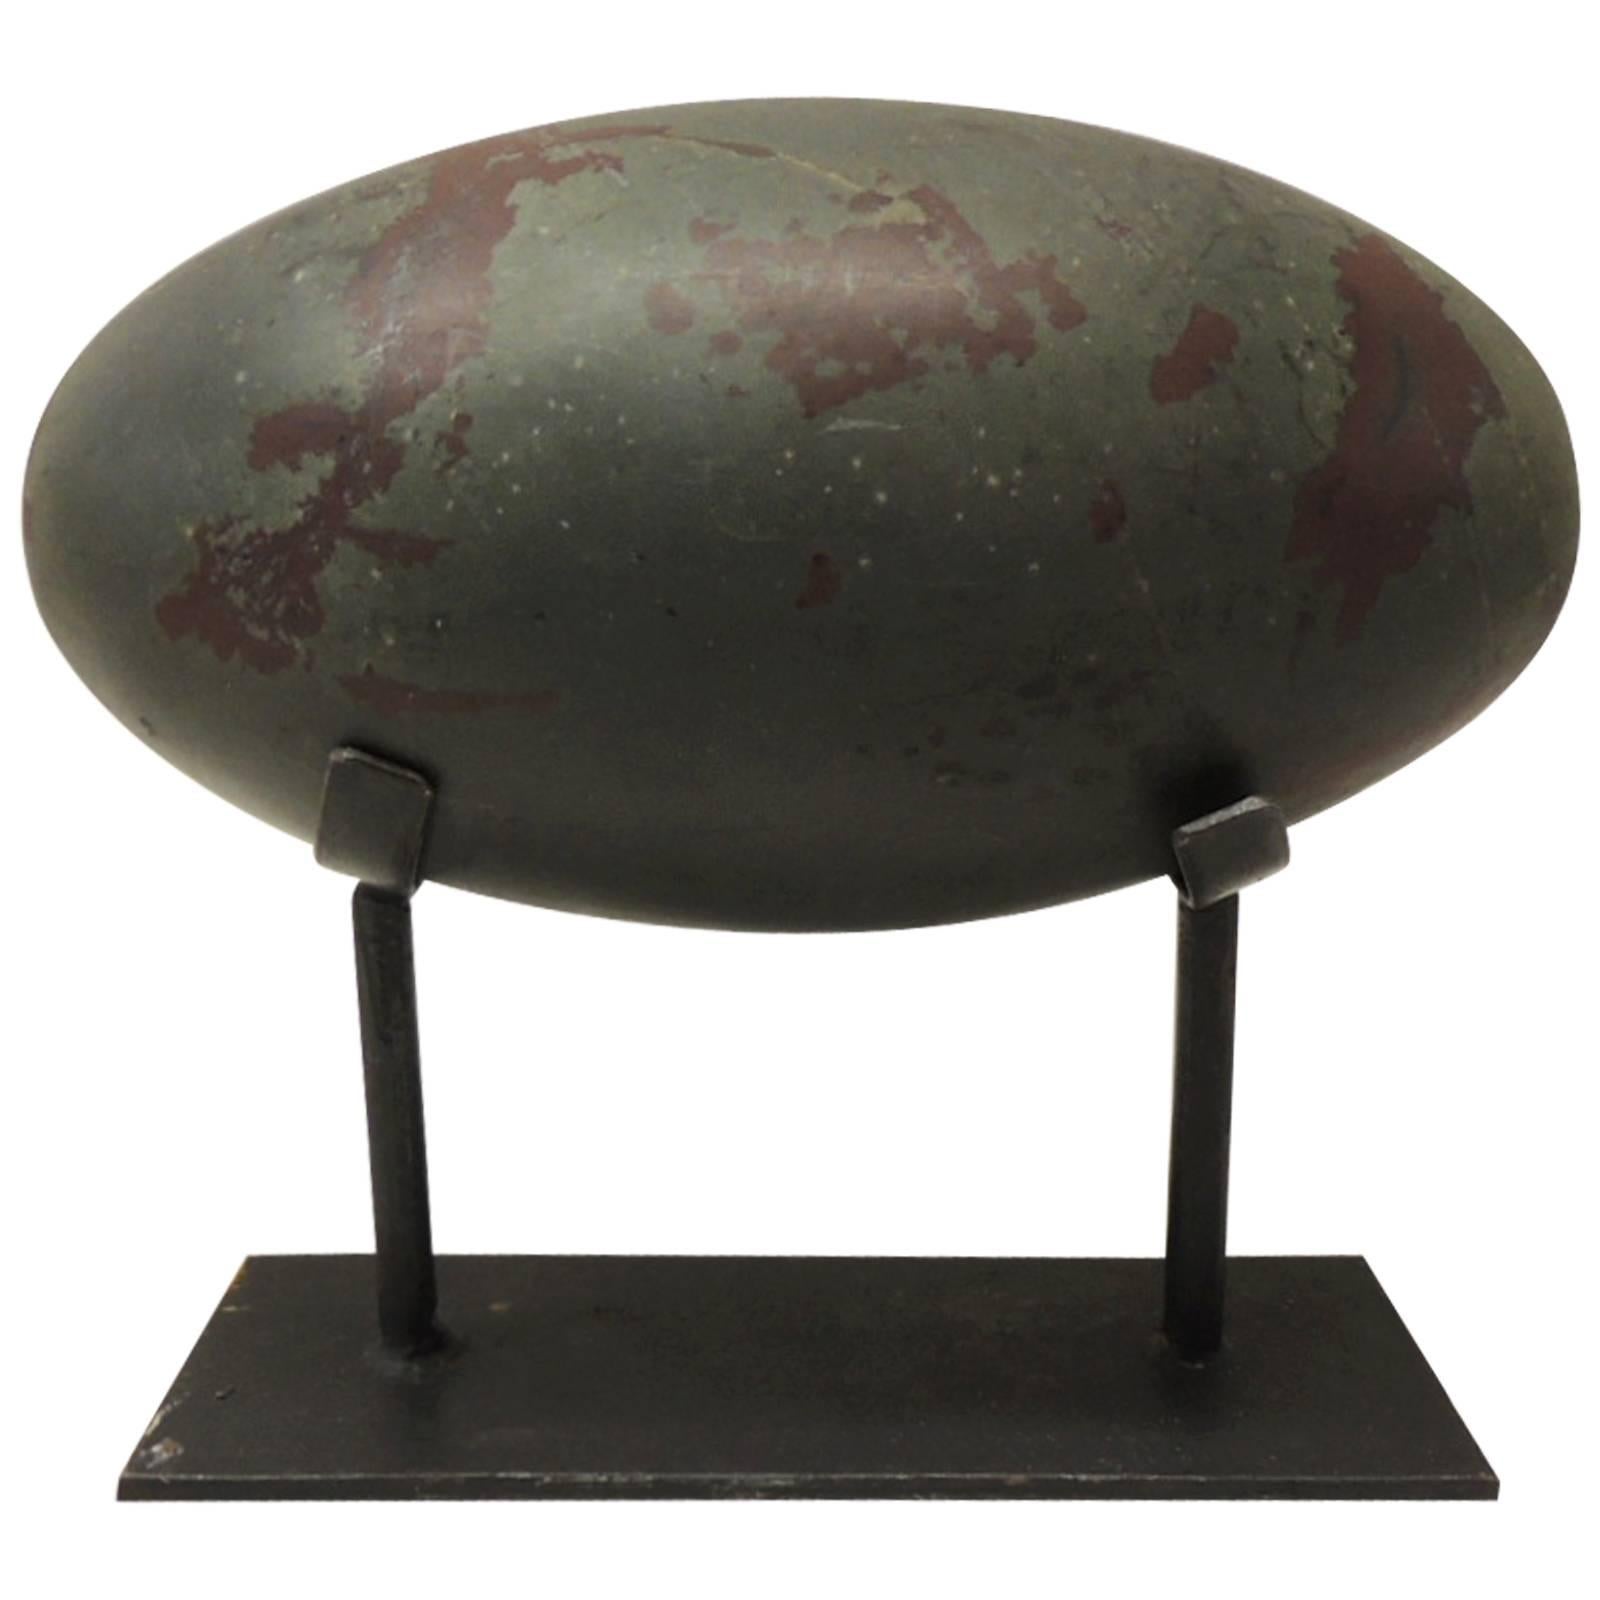 Large Shiva Lingam Stone Egg Sculpture on Iron Stand